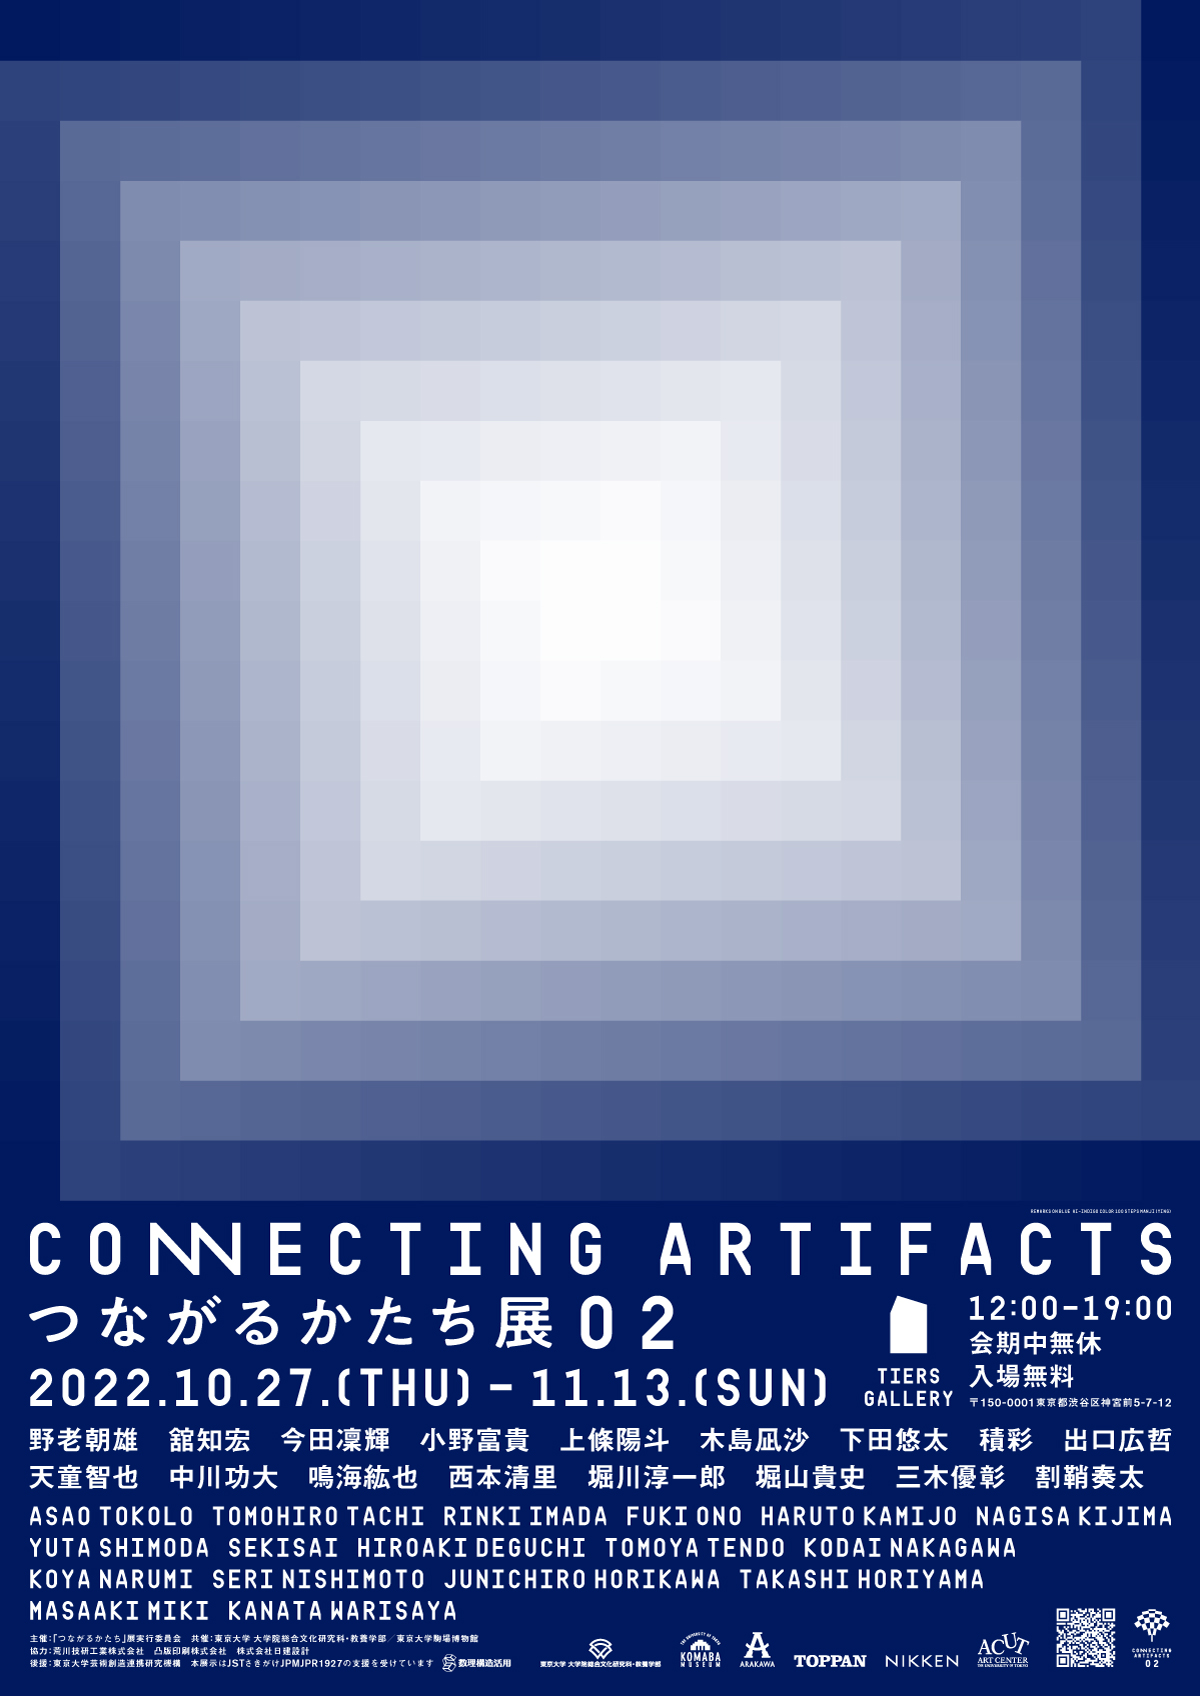 Connecting Artifacts つながるかたち展 02